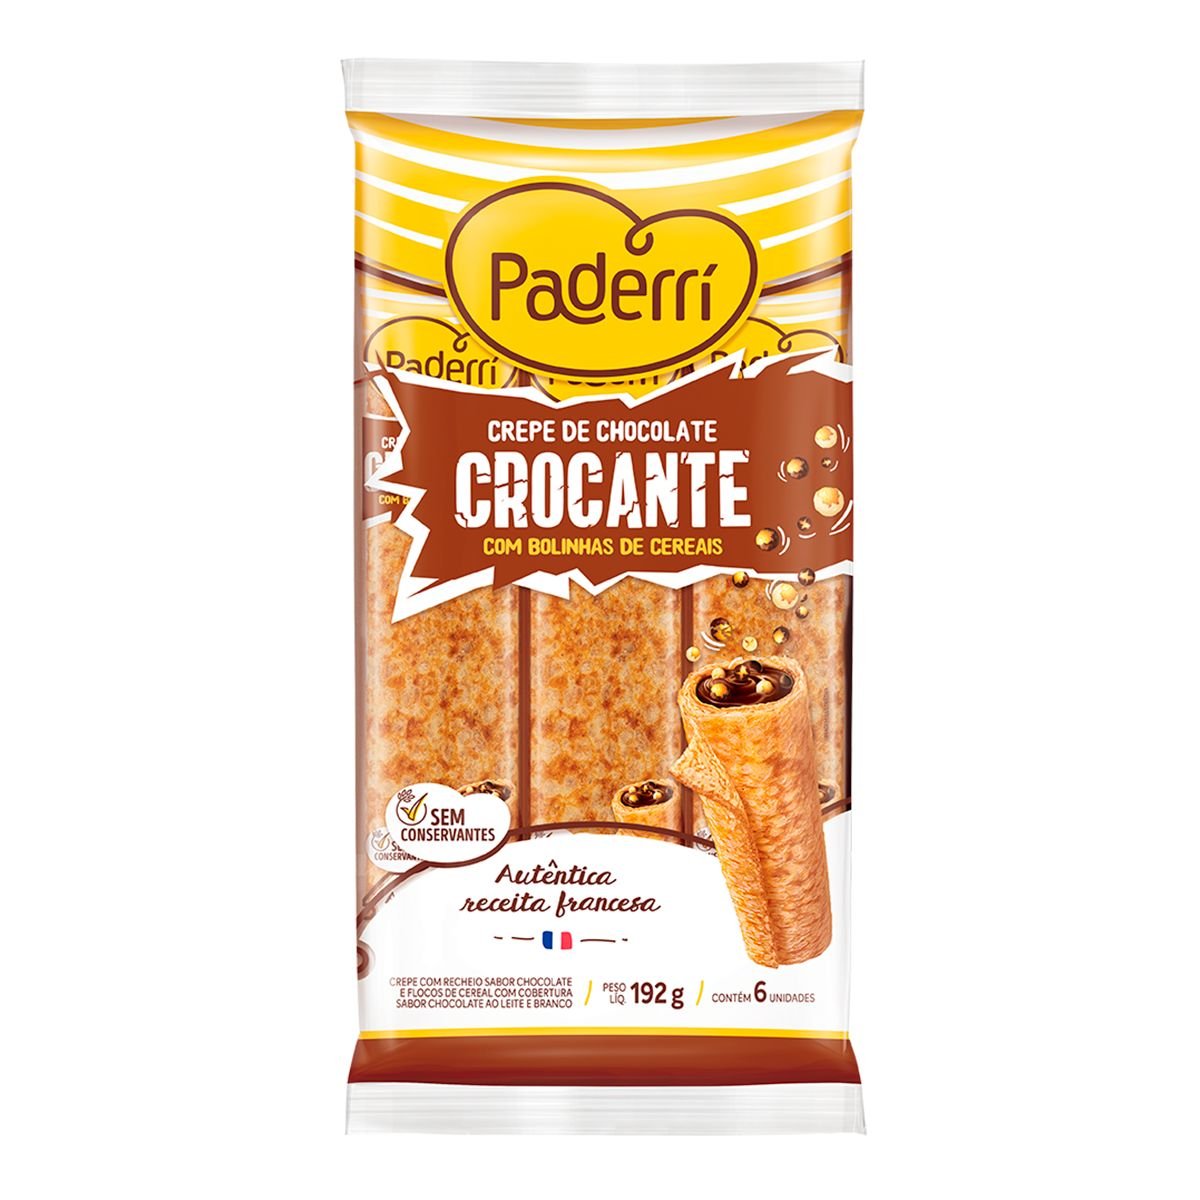 BOLO LARANJA PEDACOES DE CHOCOLATE BAUDUCCO 280G - cordeiro supermercado